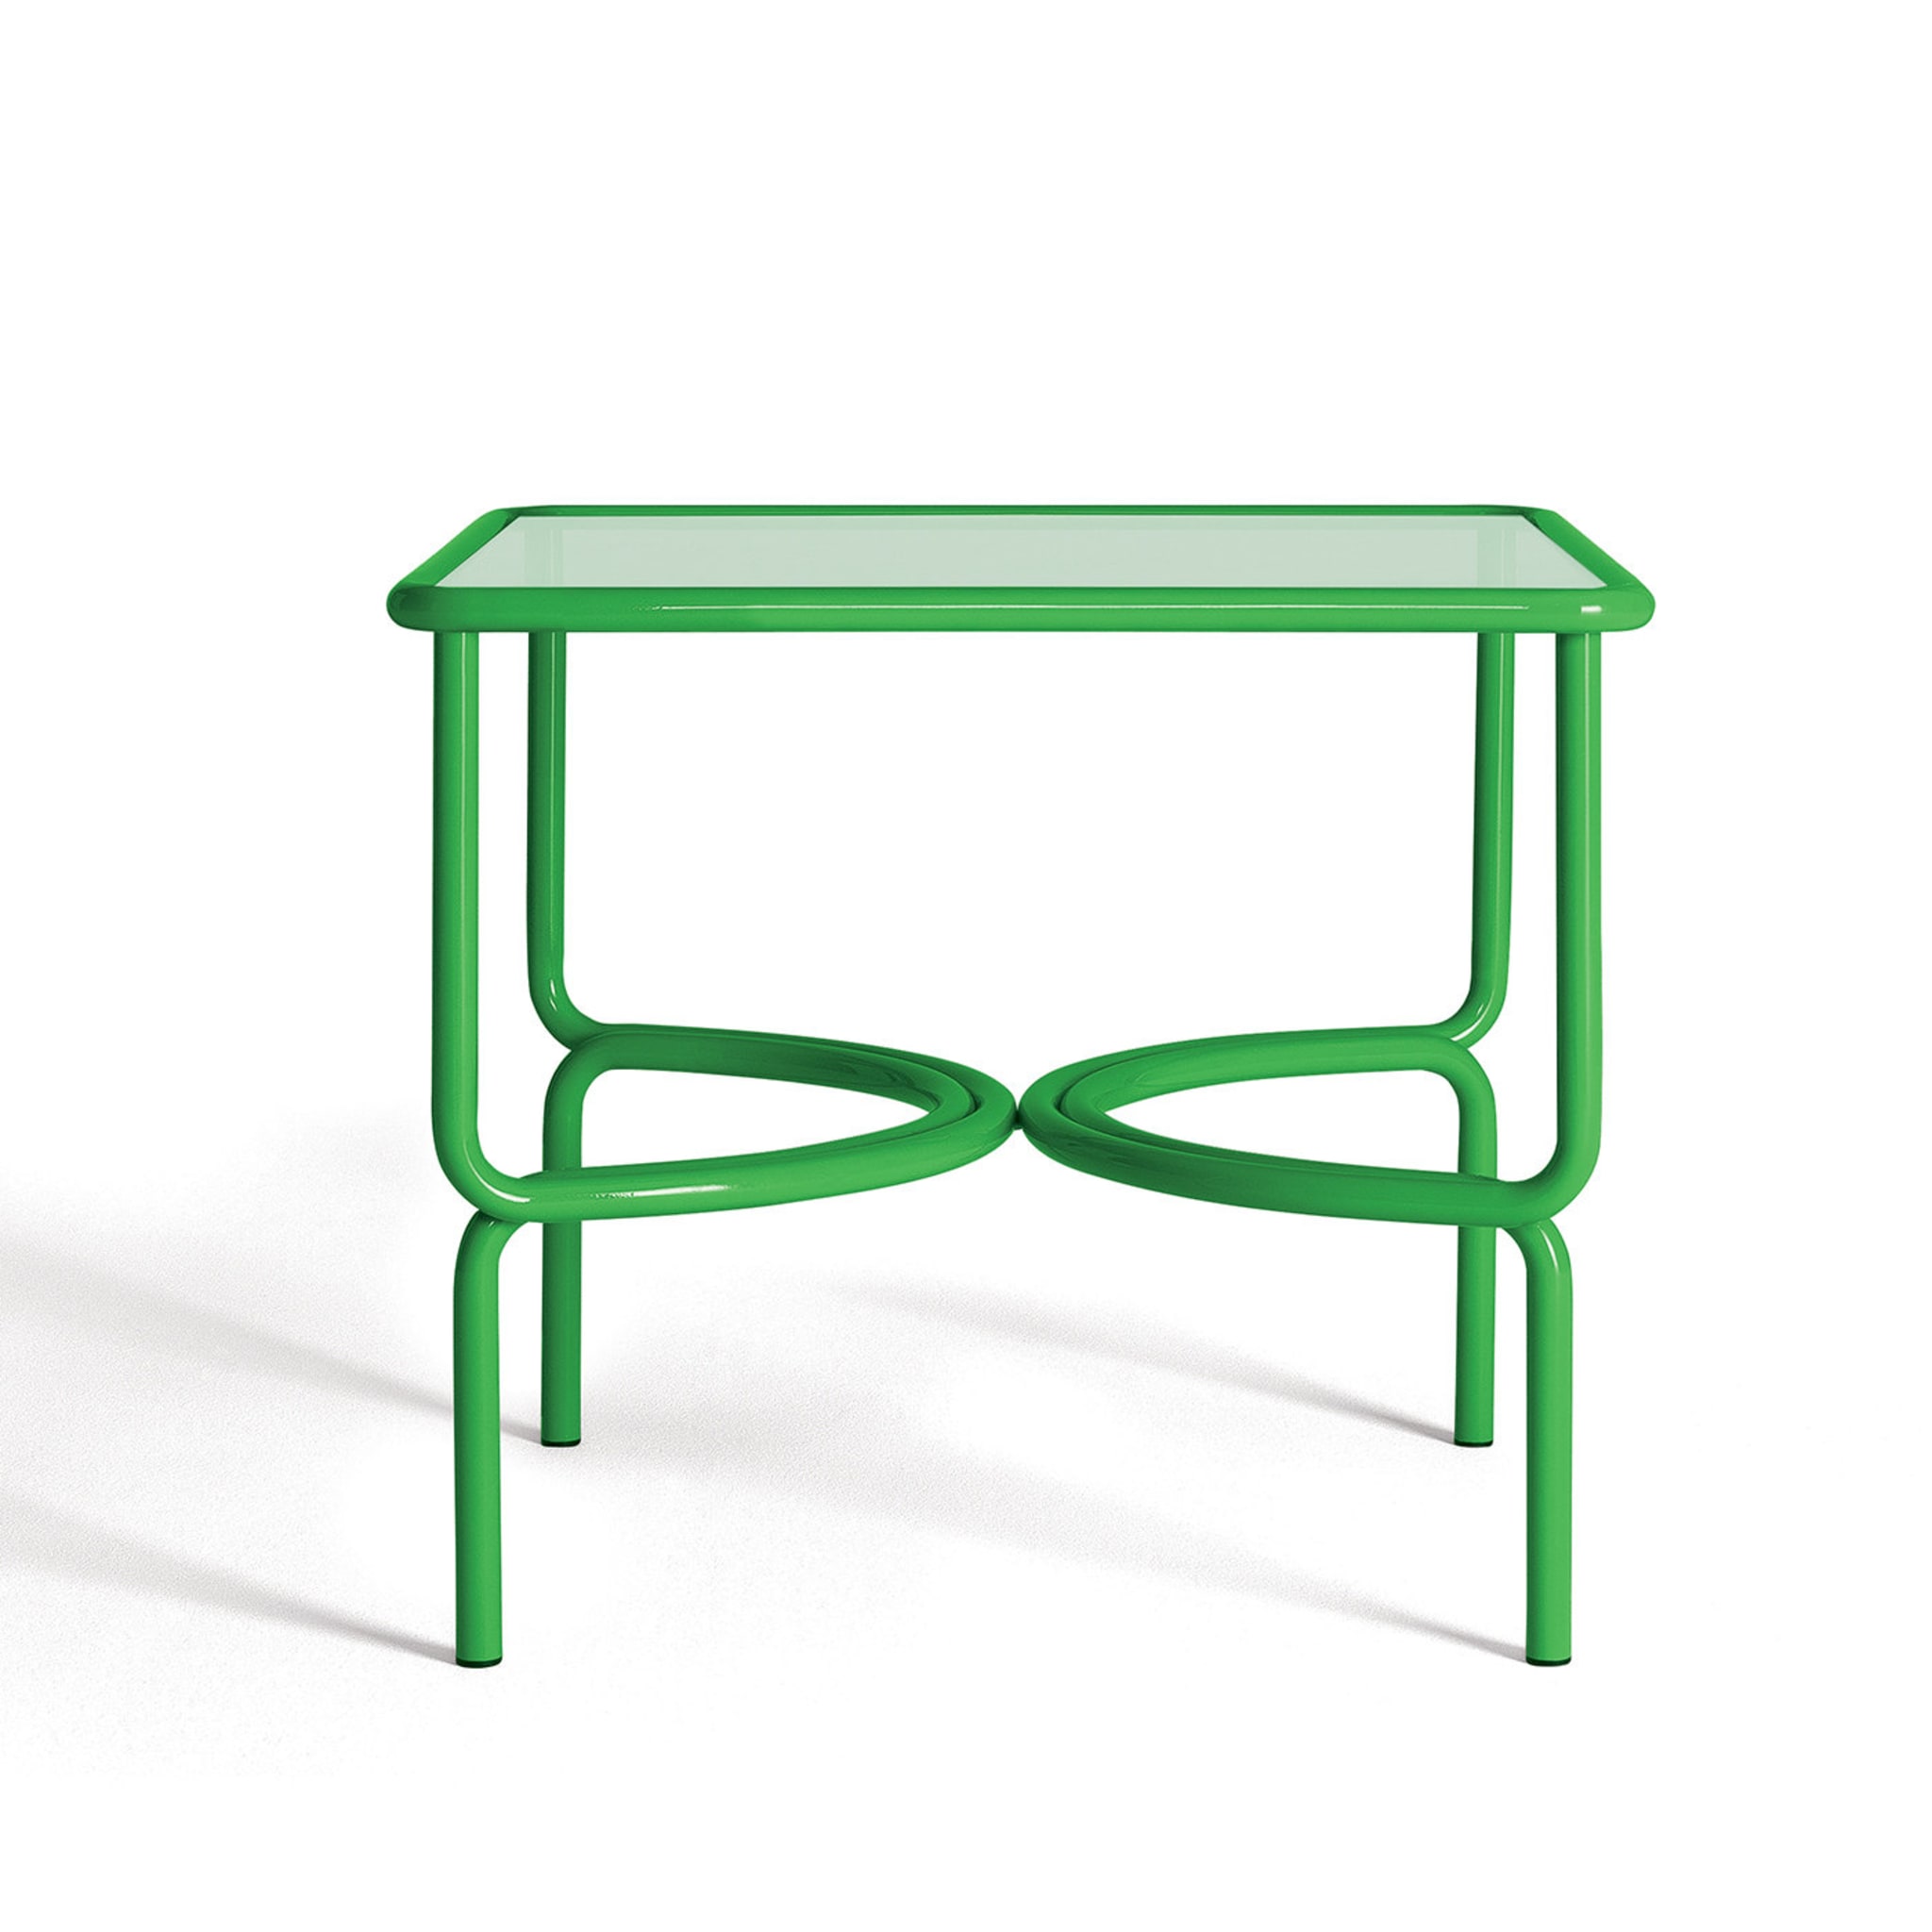 Locus Solus Green Bistro Table by Gae Aulenti - Alternative view 1